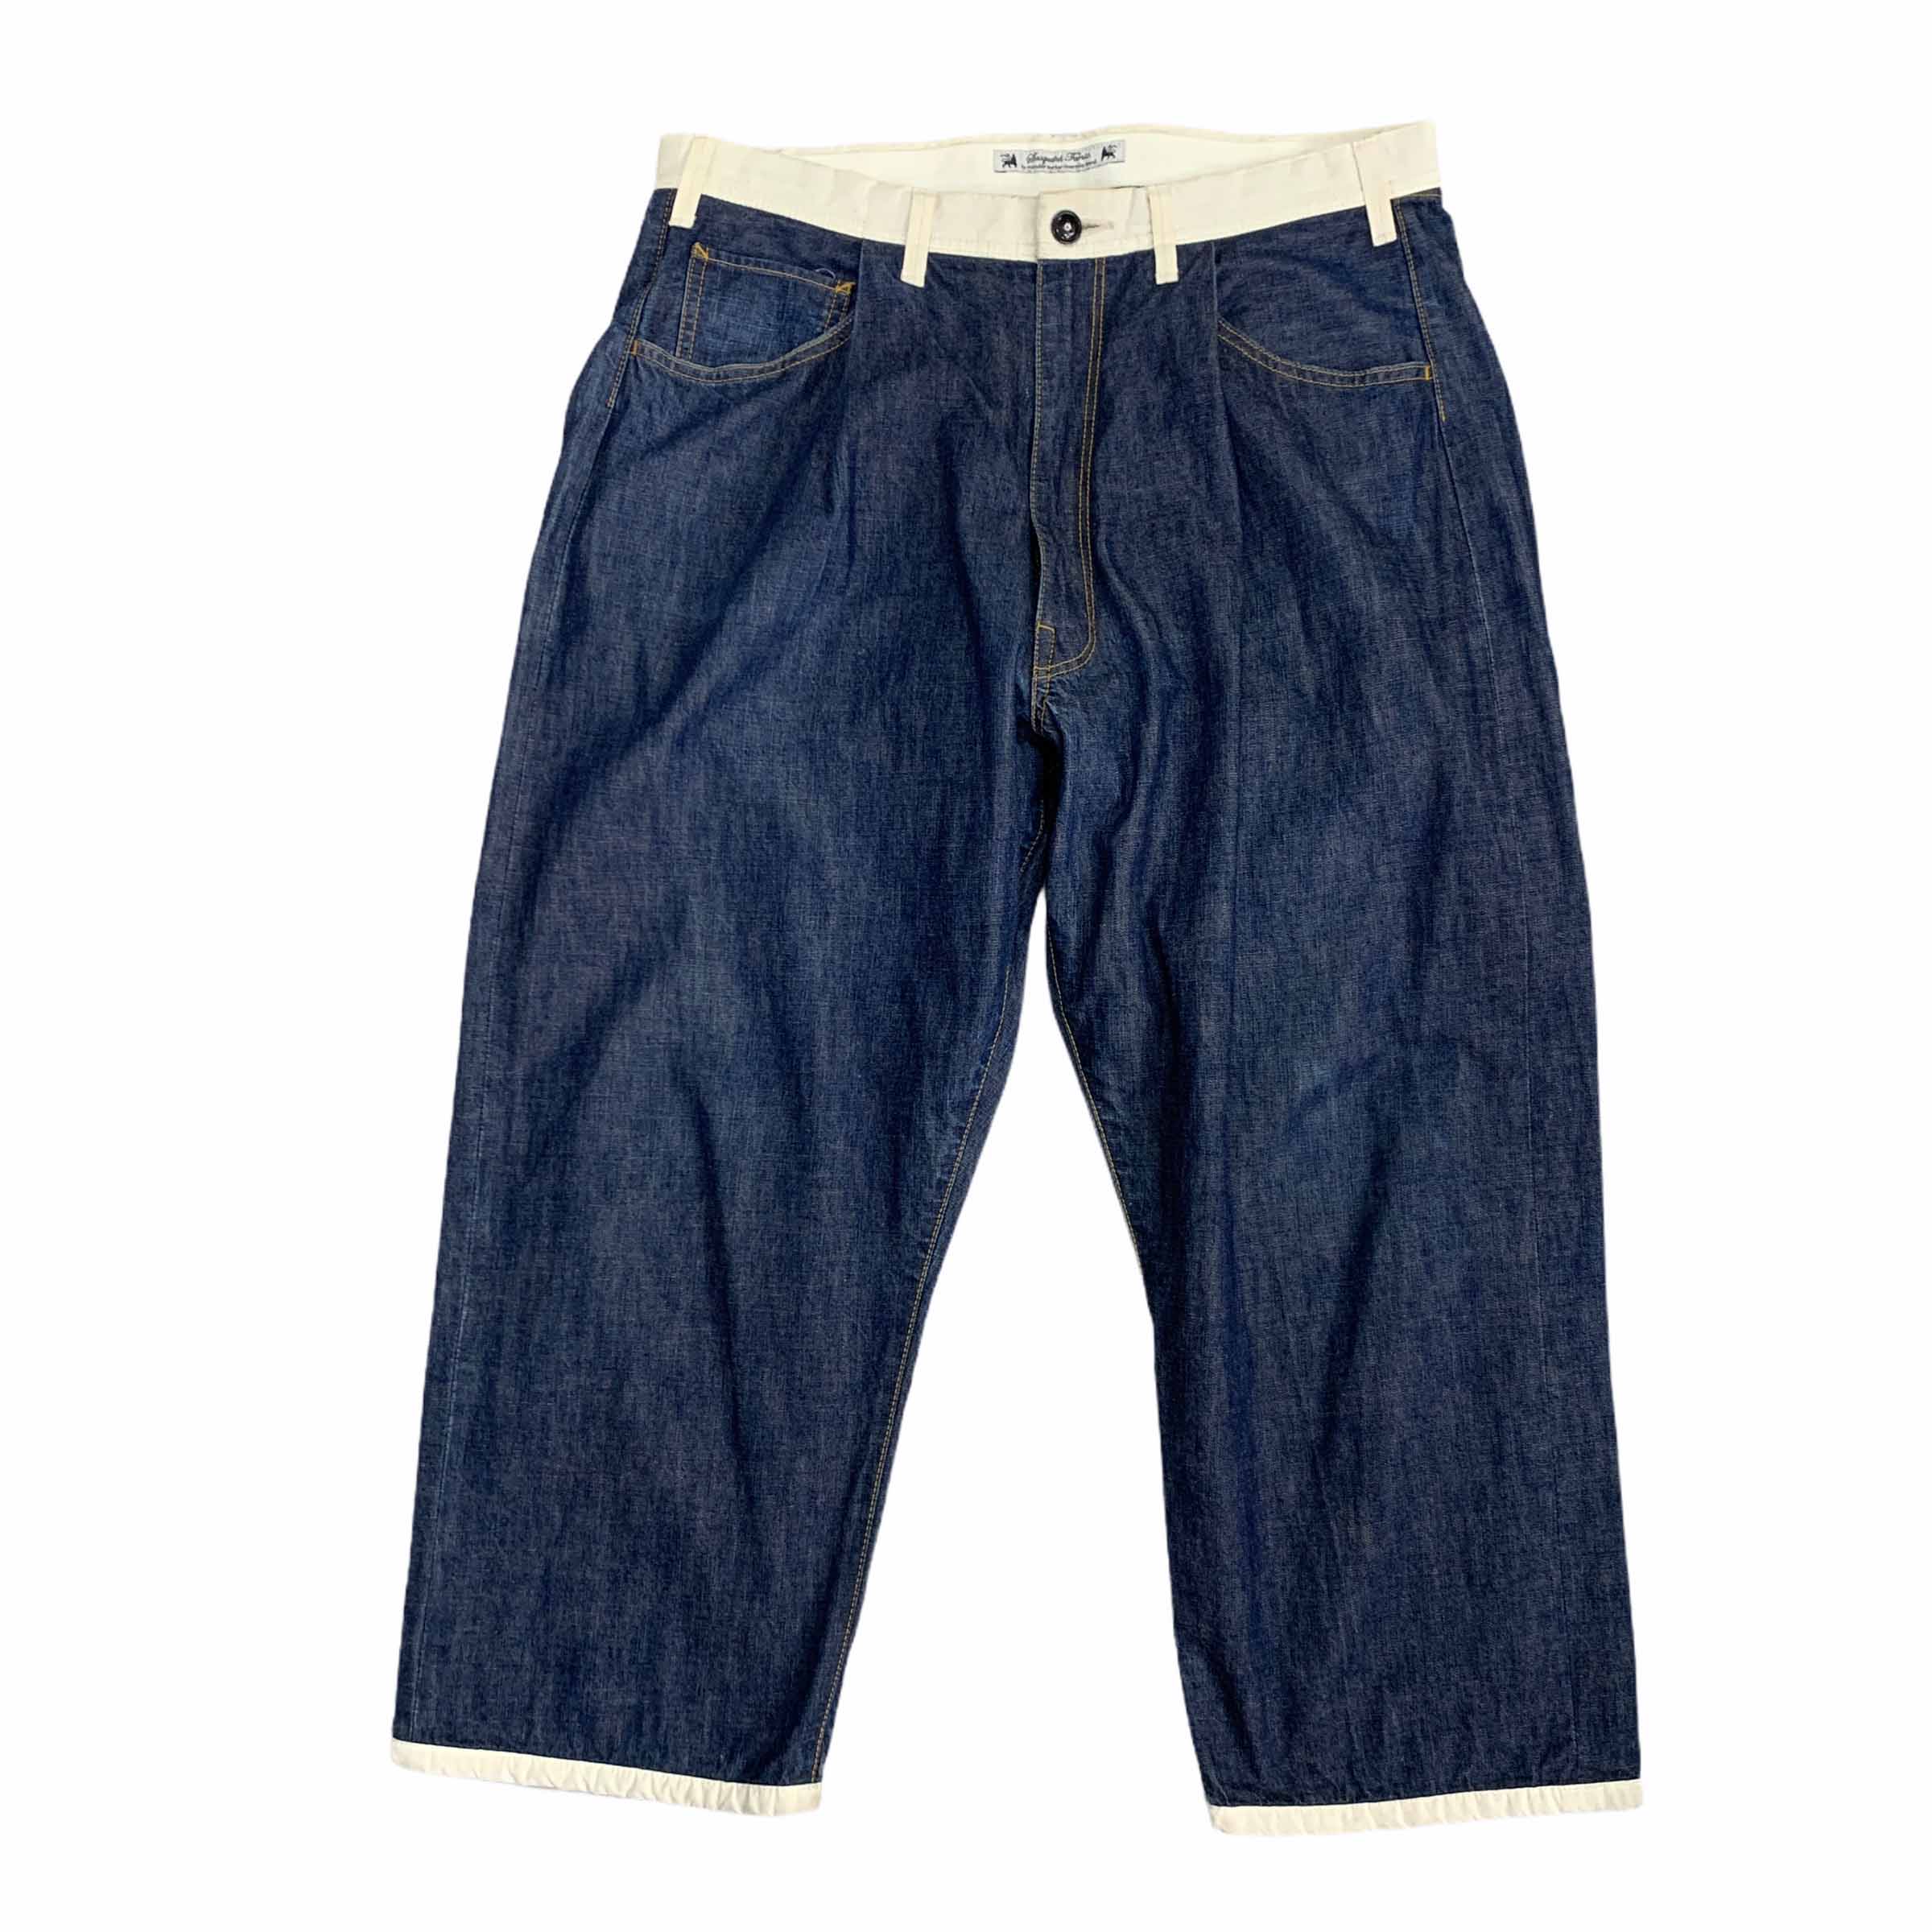 [Sasquatchfabrix] Taped Denim Pants - Size XL